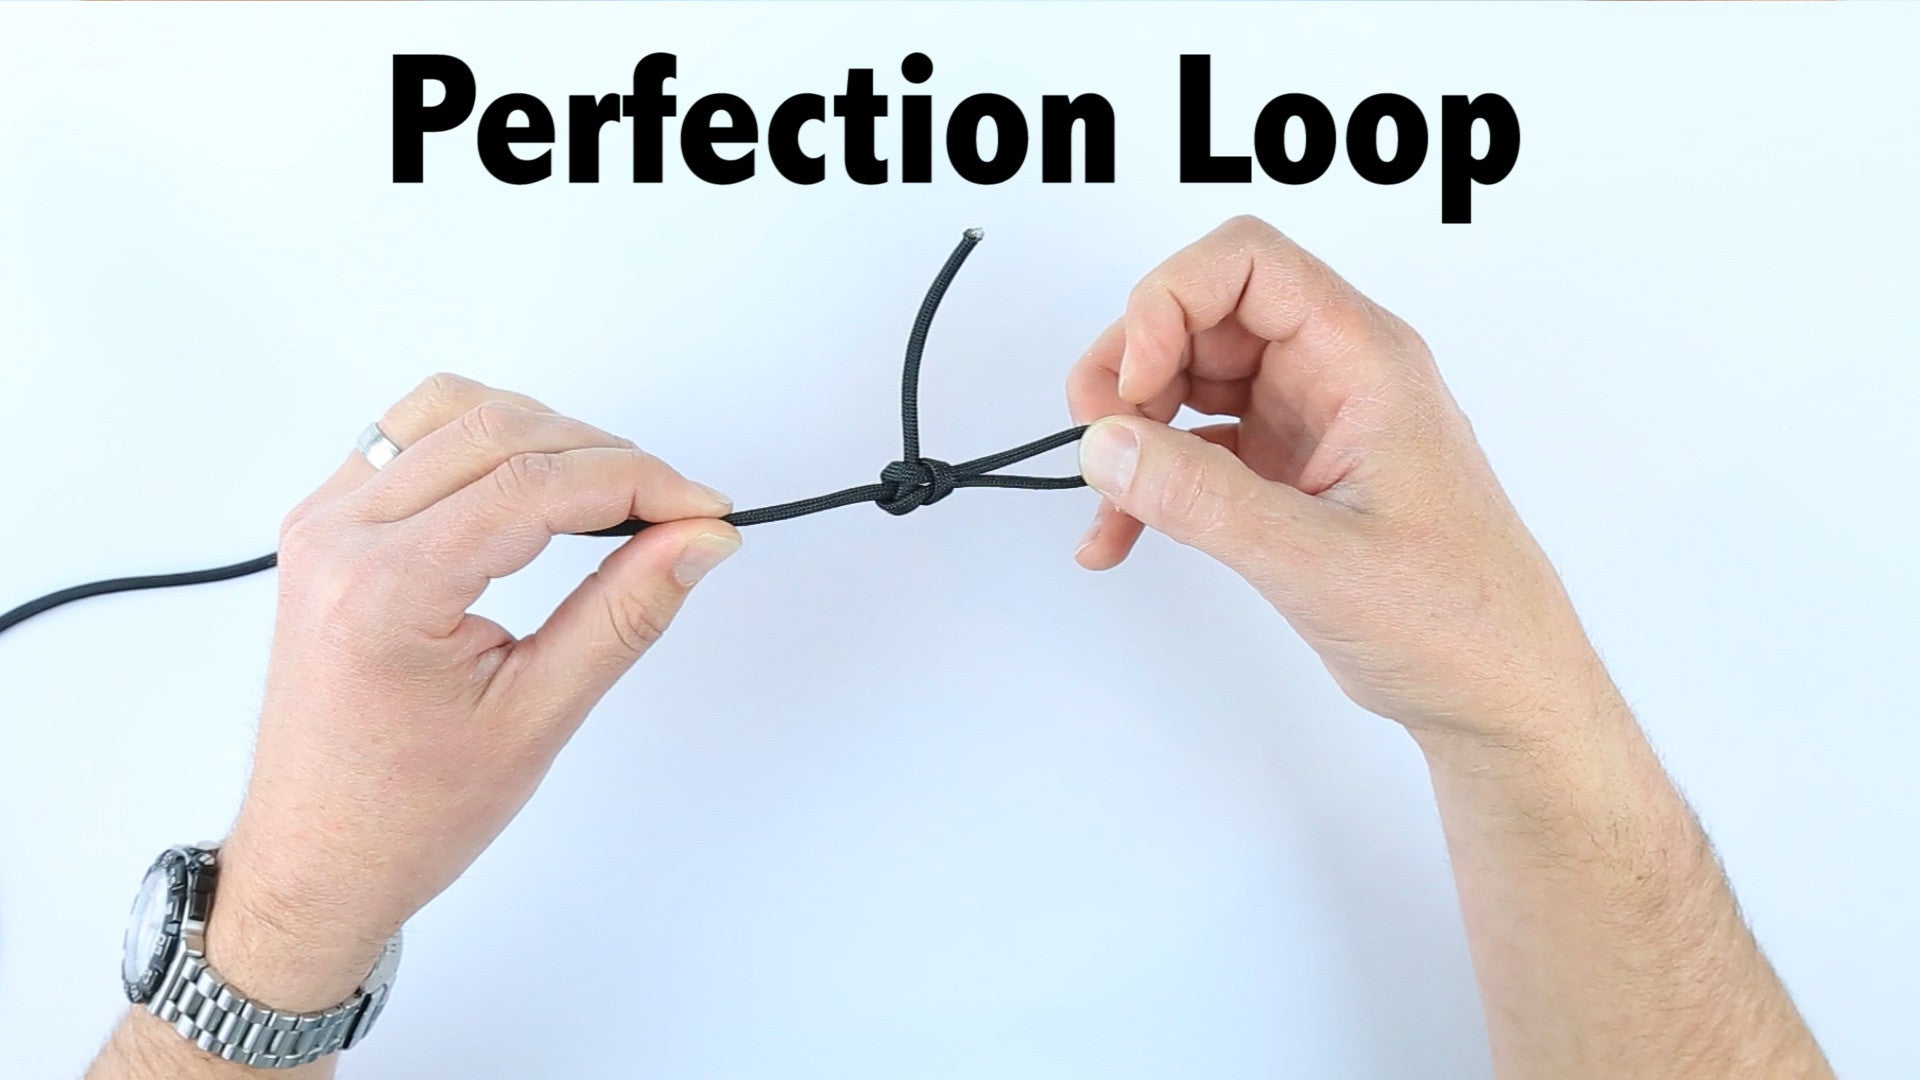 Perfection Loop